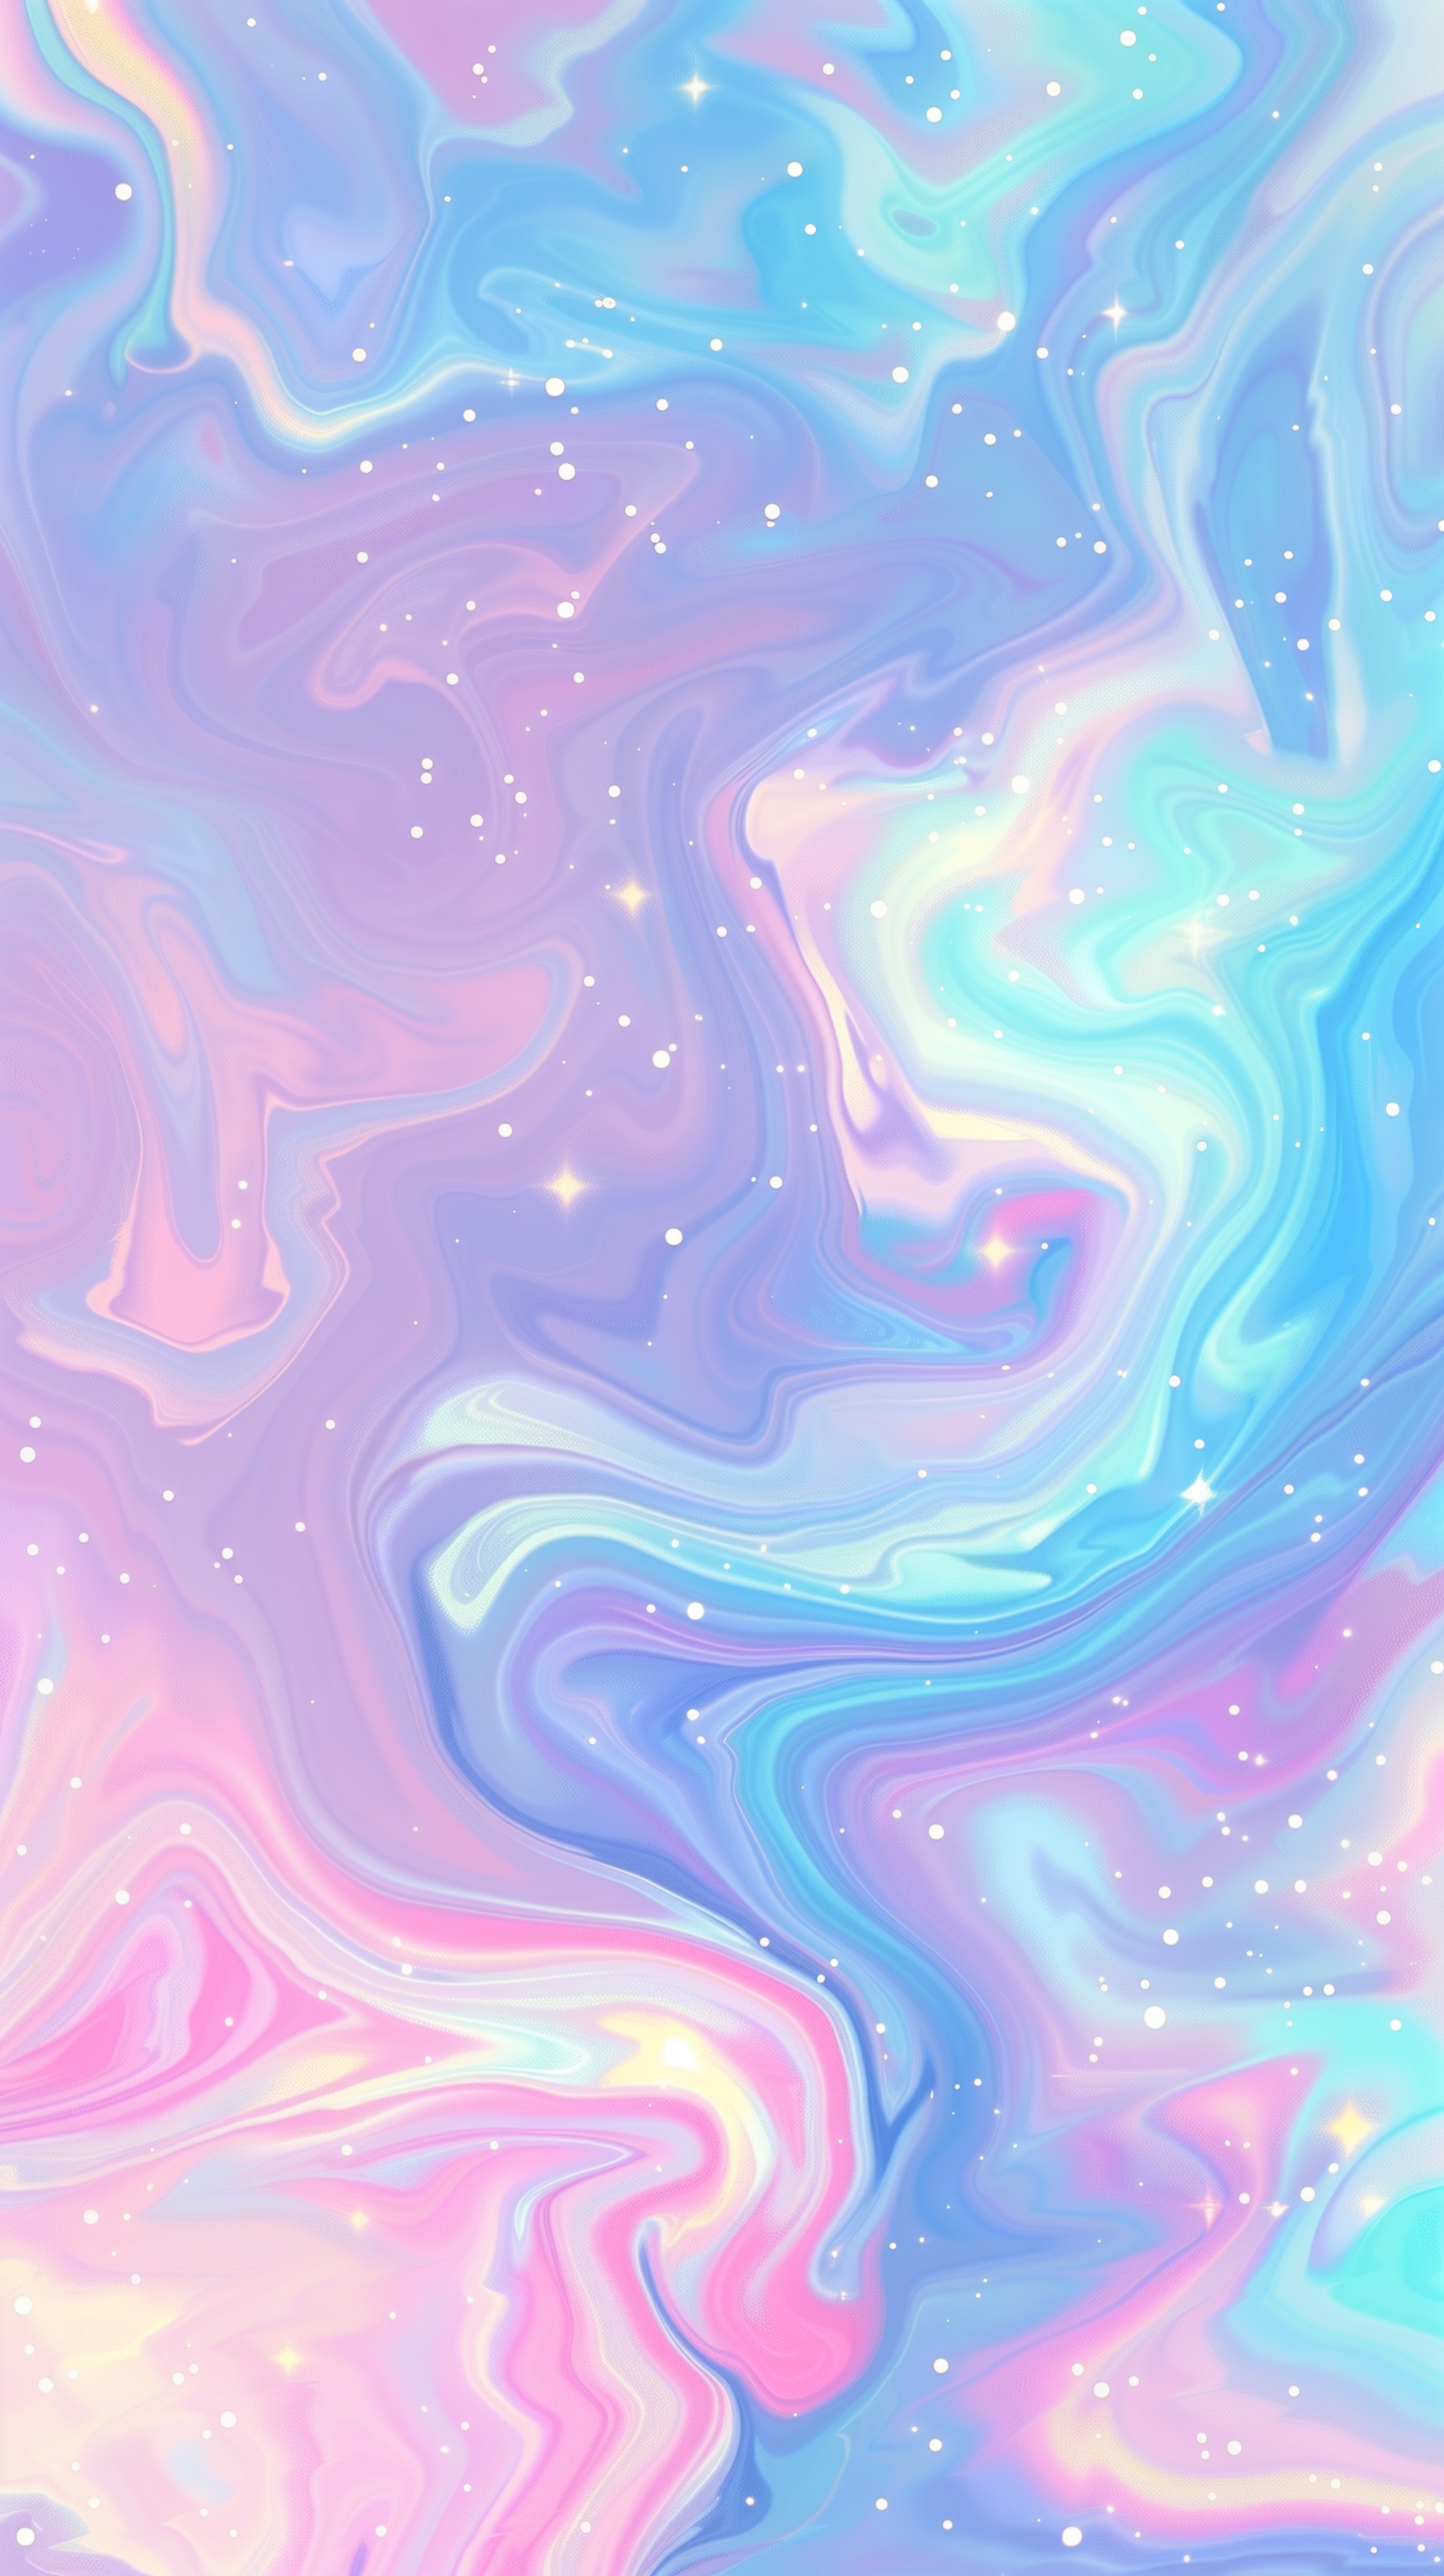 Colorful Swirls of Pink and Blue ورق الجدران[68dfb80c26194abb9aca]